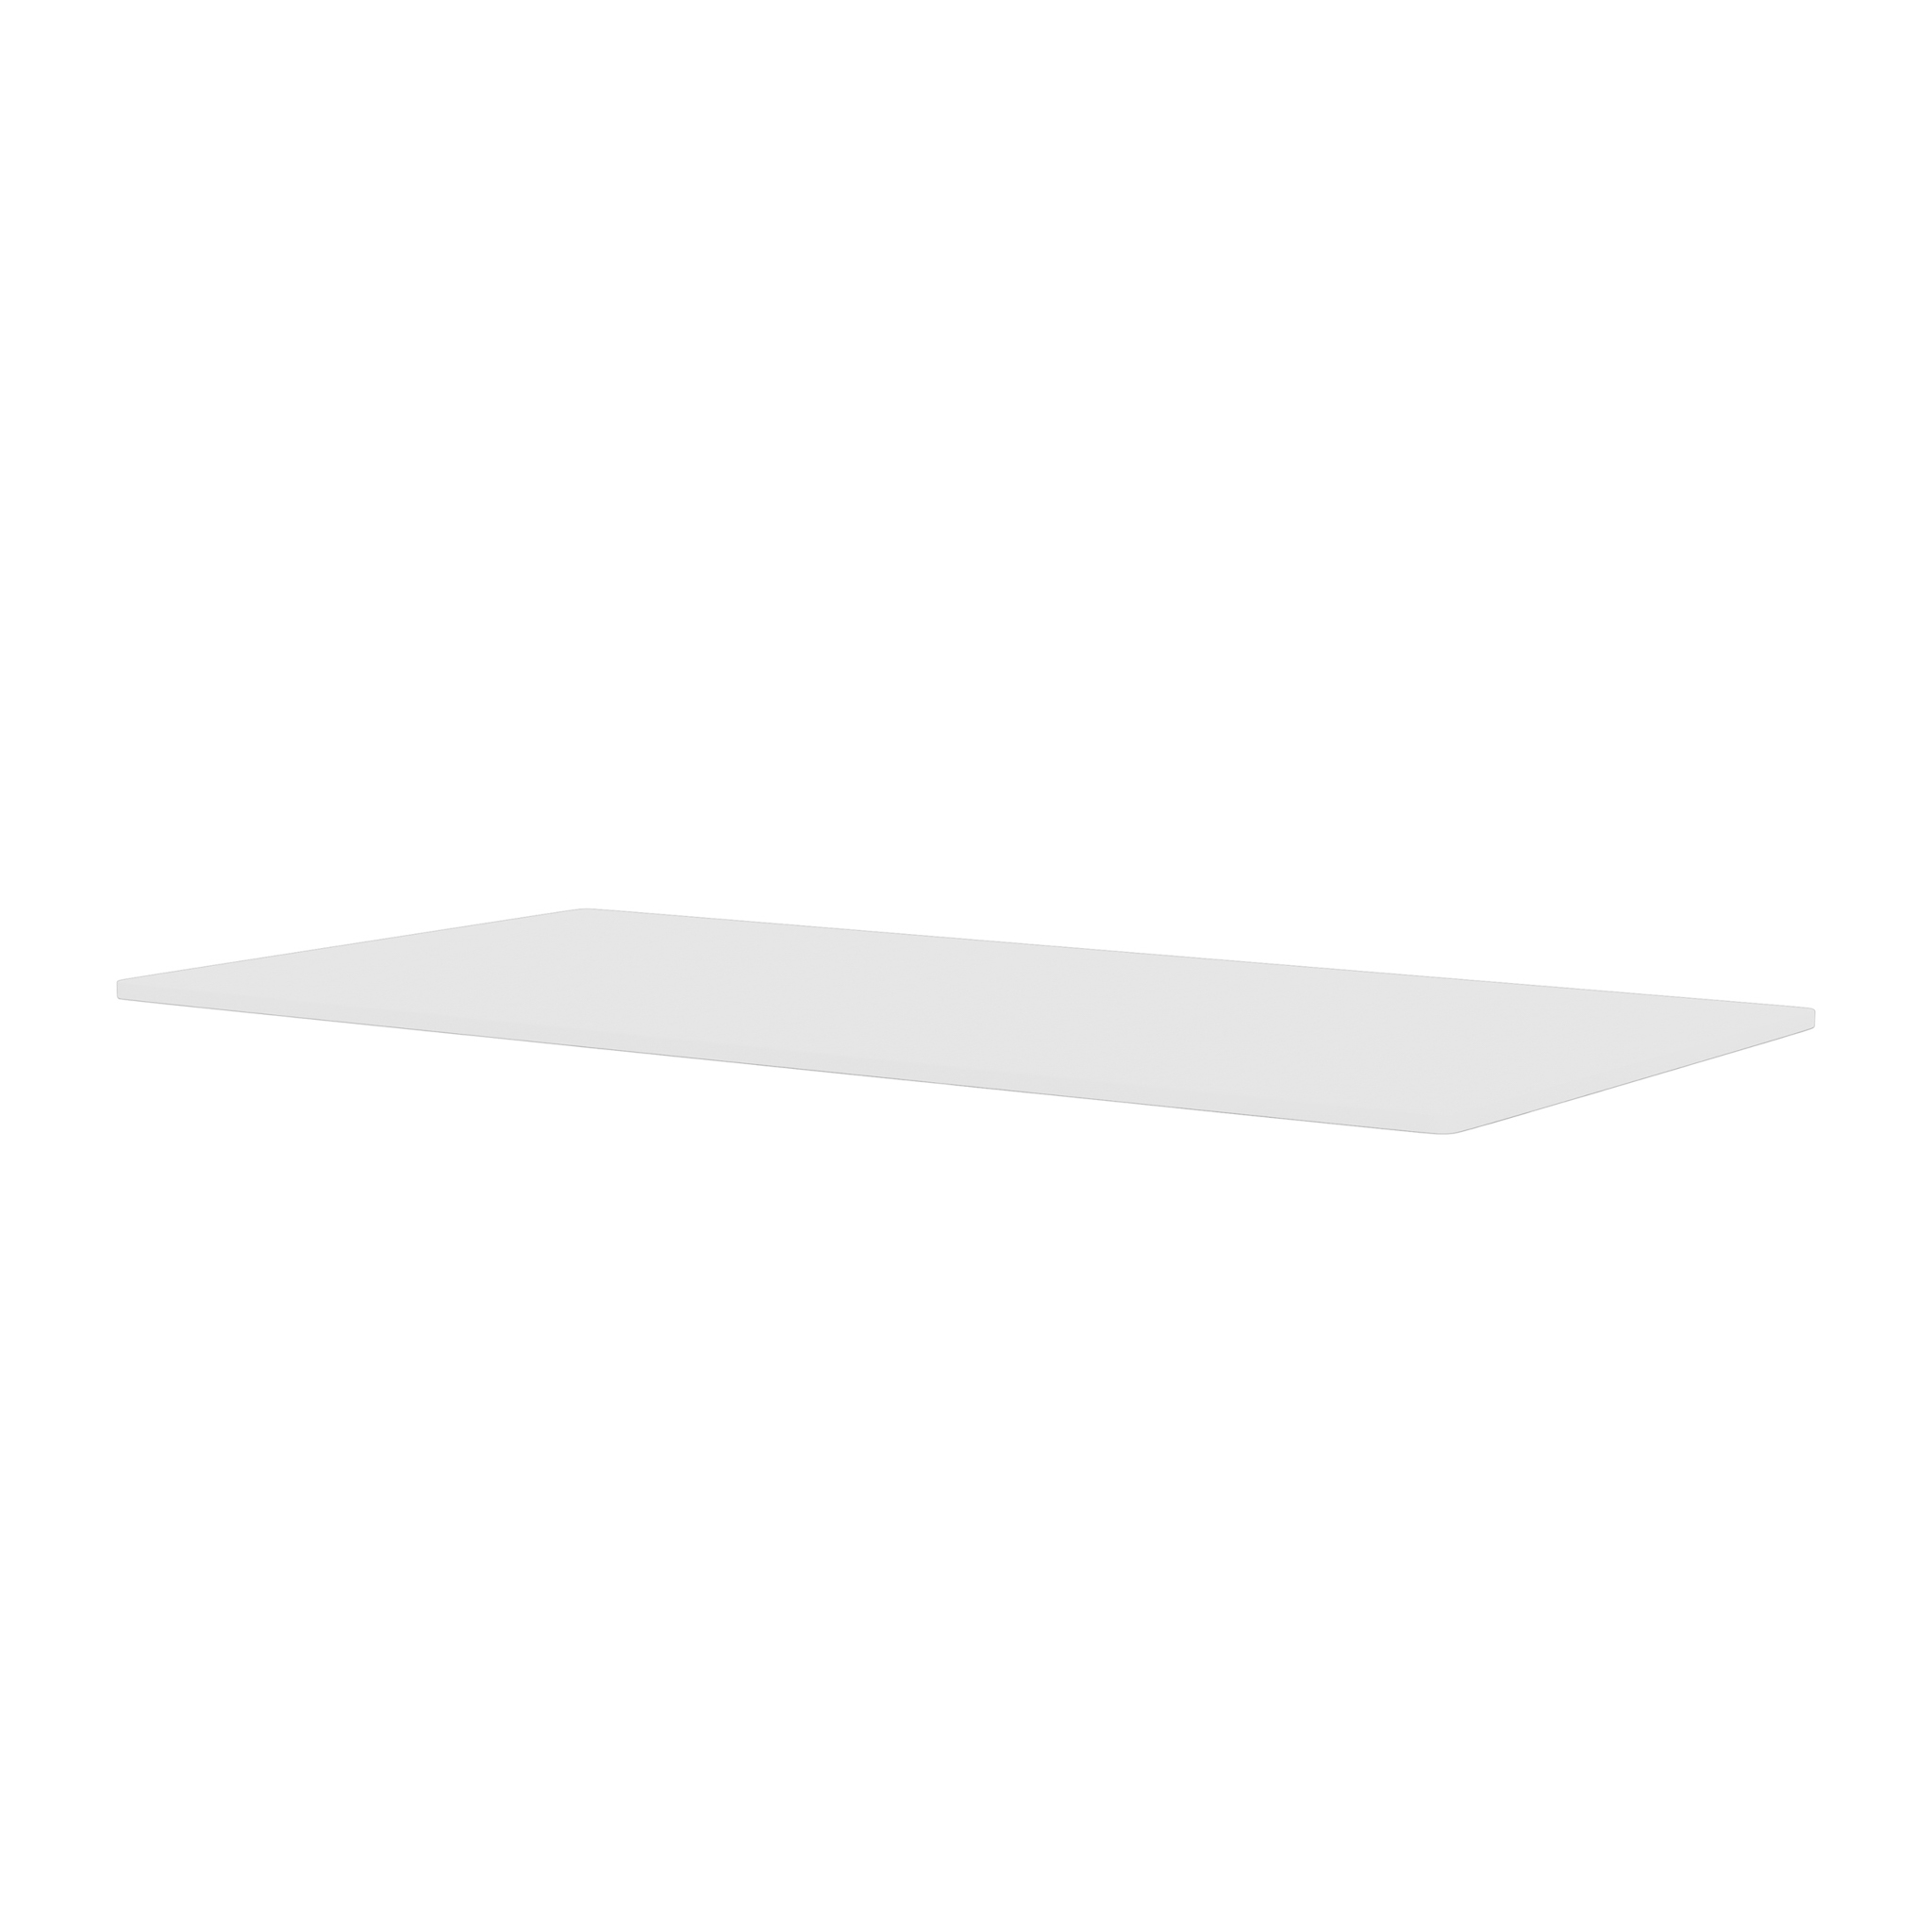 MONTANA // PANTON WIRE EXTENDED EINLEGEBODEN - TIEFE 35cm | 101 NEW WHITE